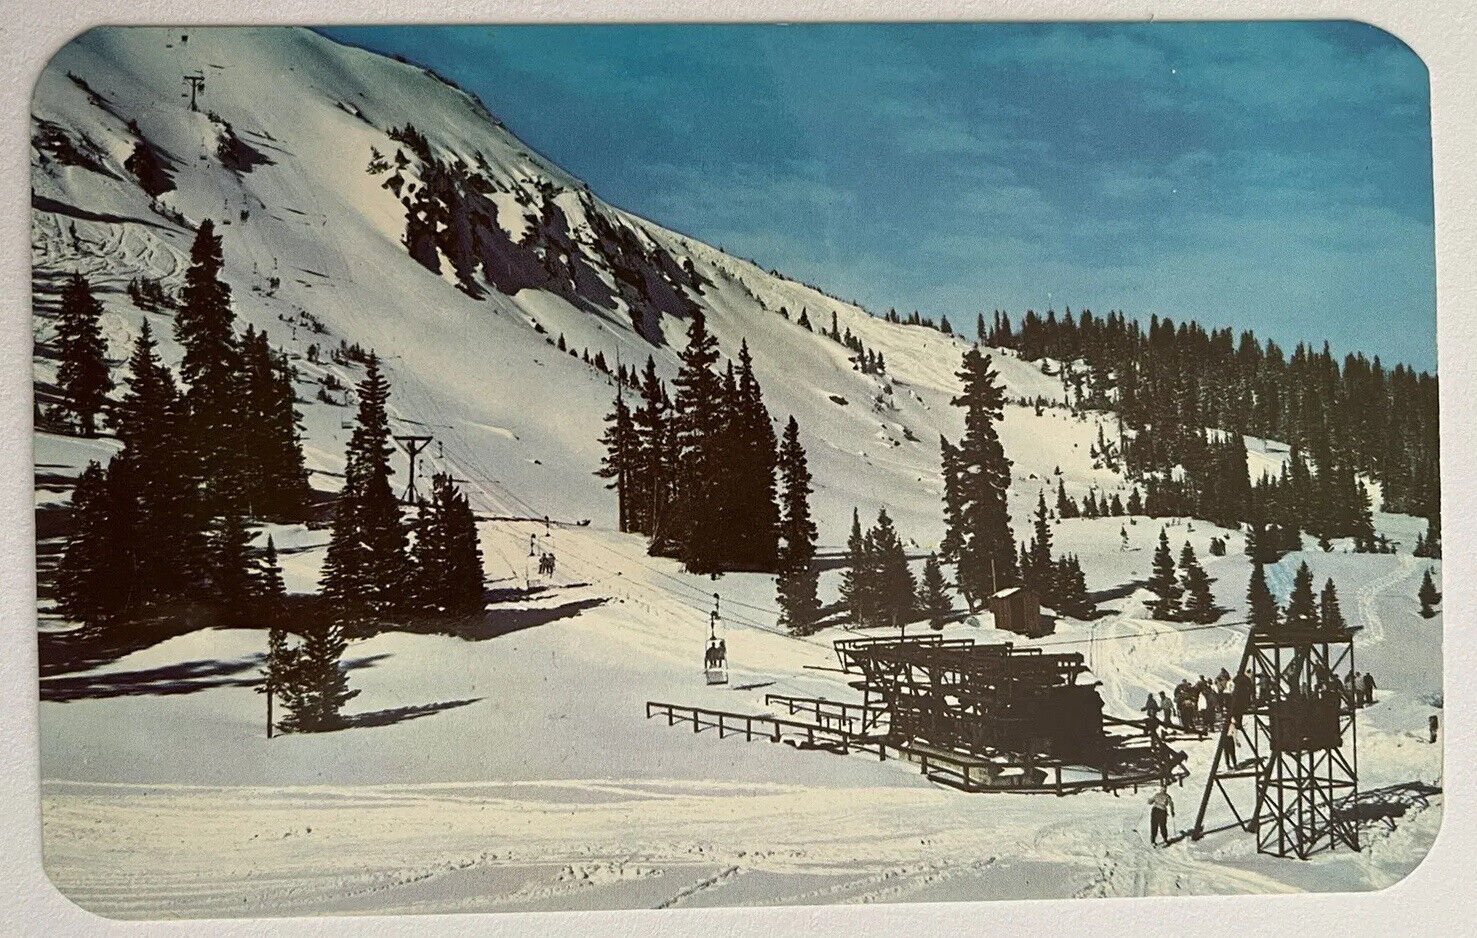 Berthoud Pass Colorado Chair Ski Lift Vintage Postcard c1950 Group of Skiers